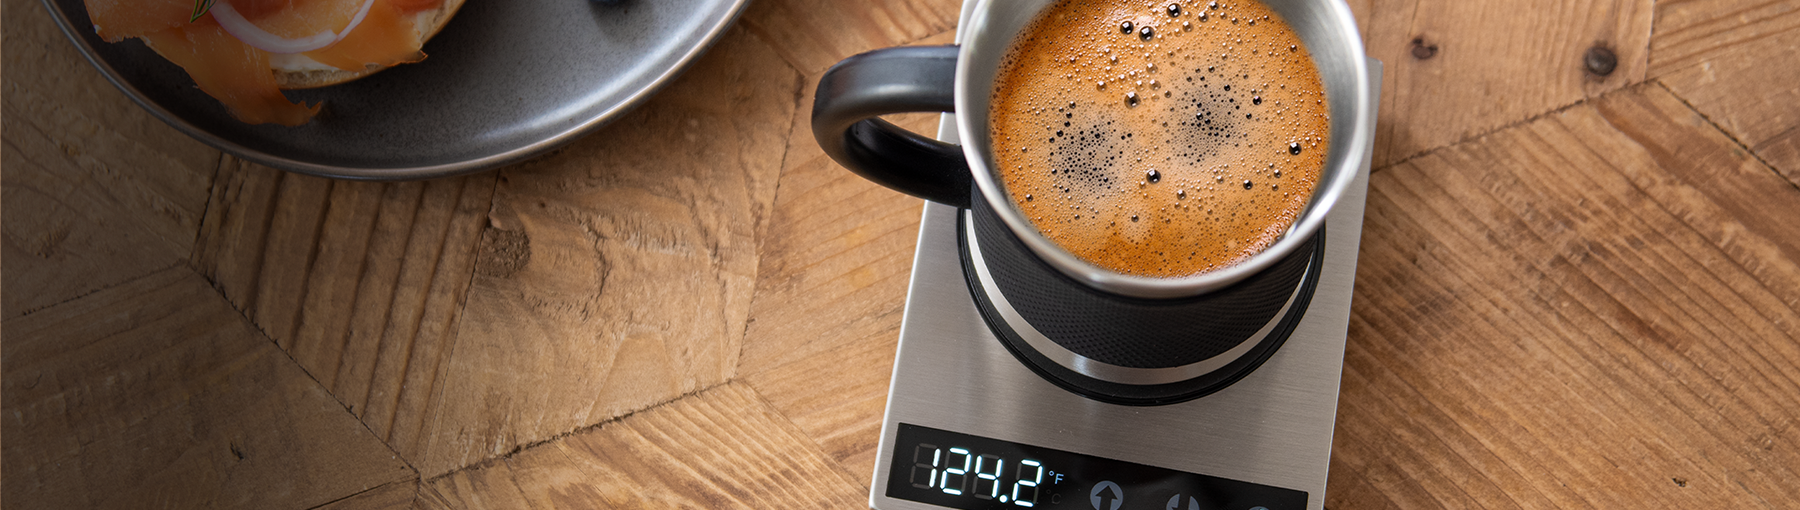 COSORI Coffee Grinder and Coffee Mug Warmer & Mug Set